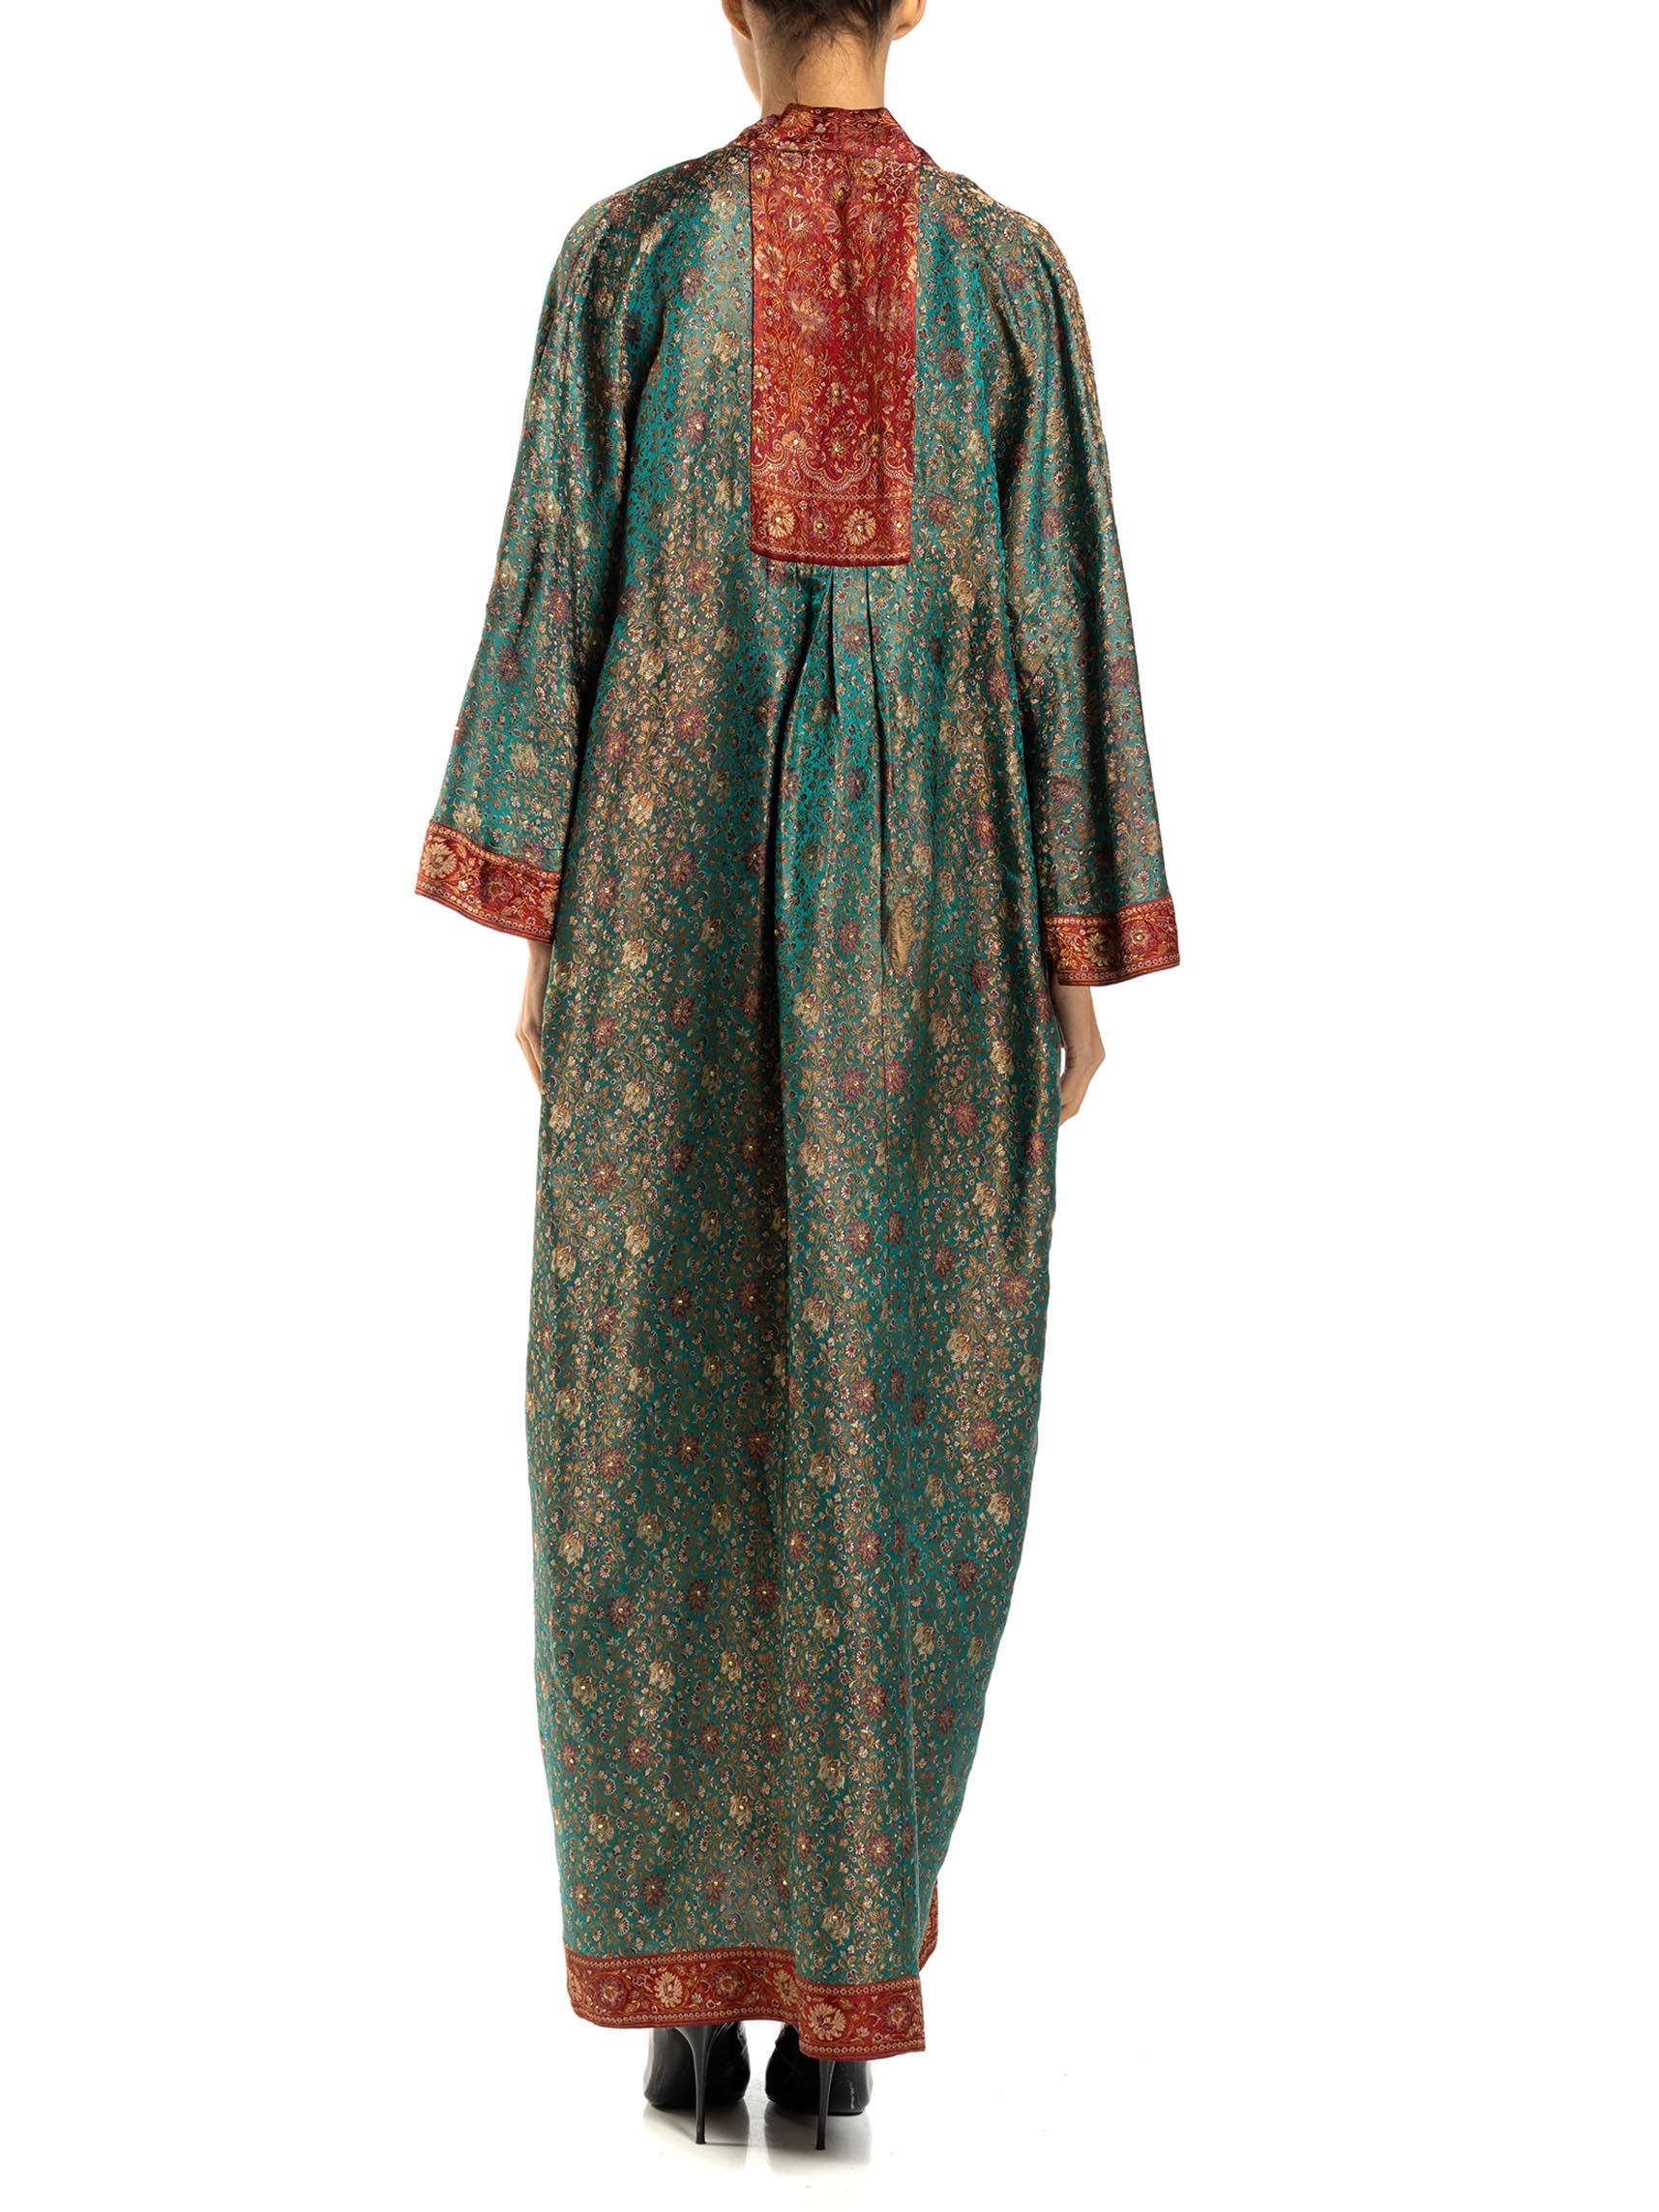 MORPHEW COLLECTION Teal & Burgundy Floral Silk Studded Kaftan Made From Vintage For Sale 6